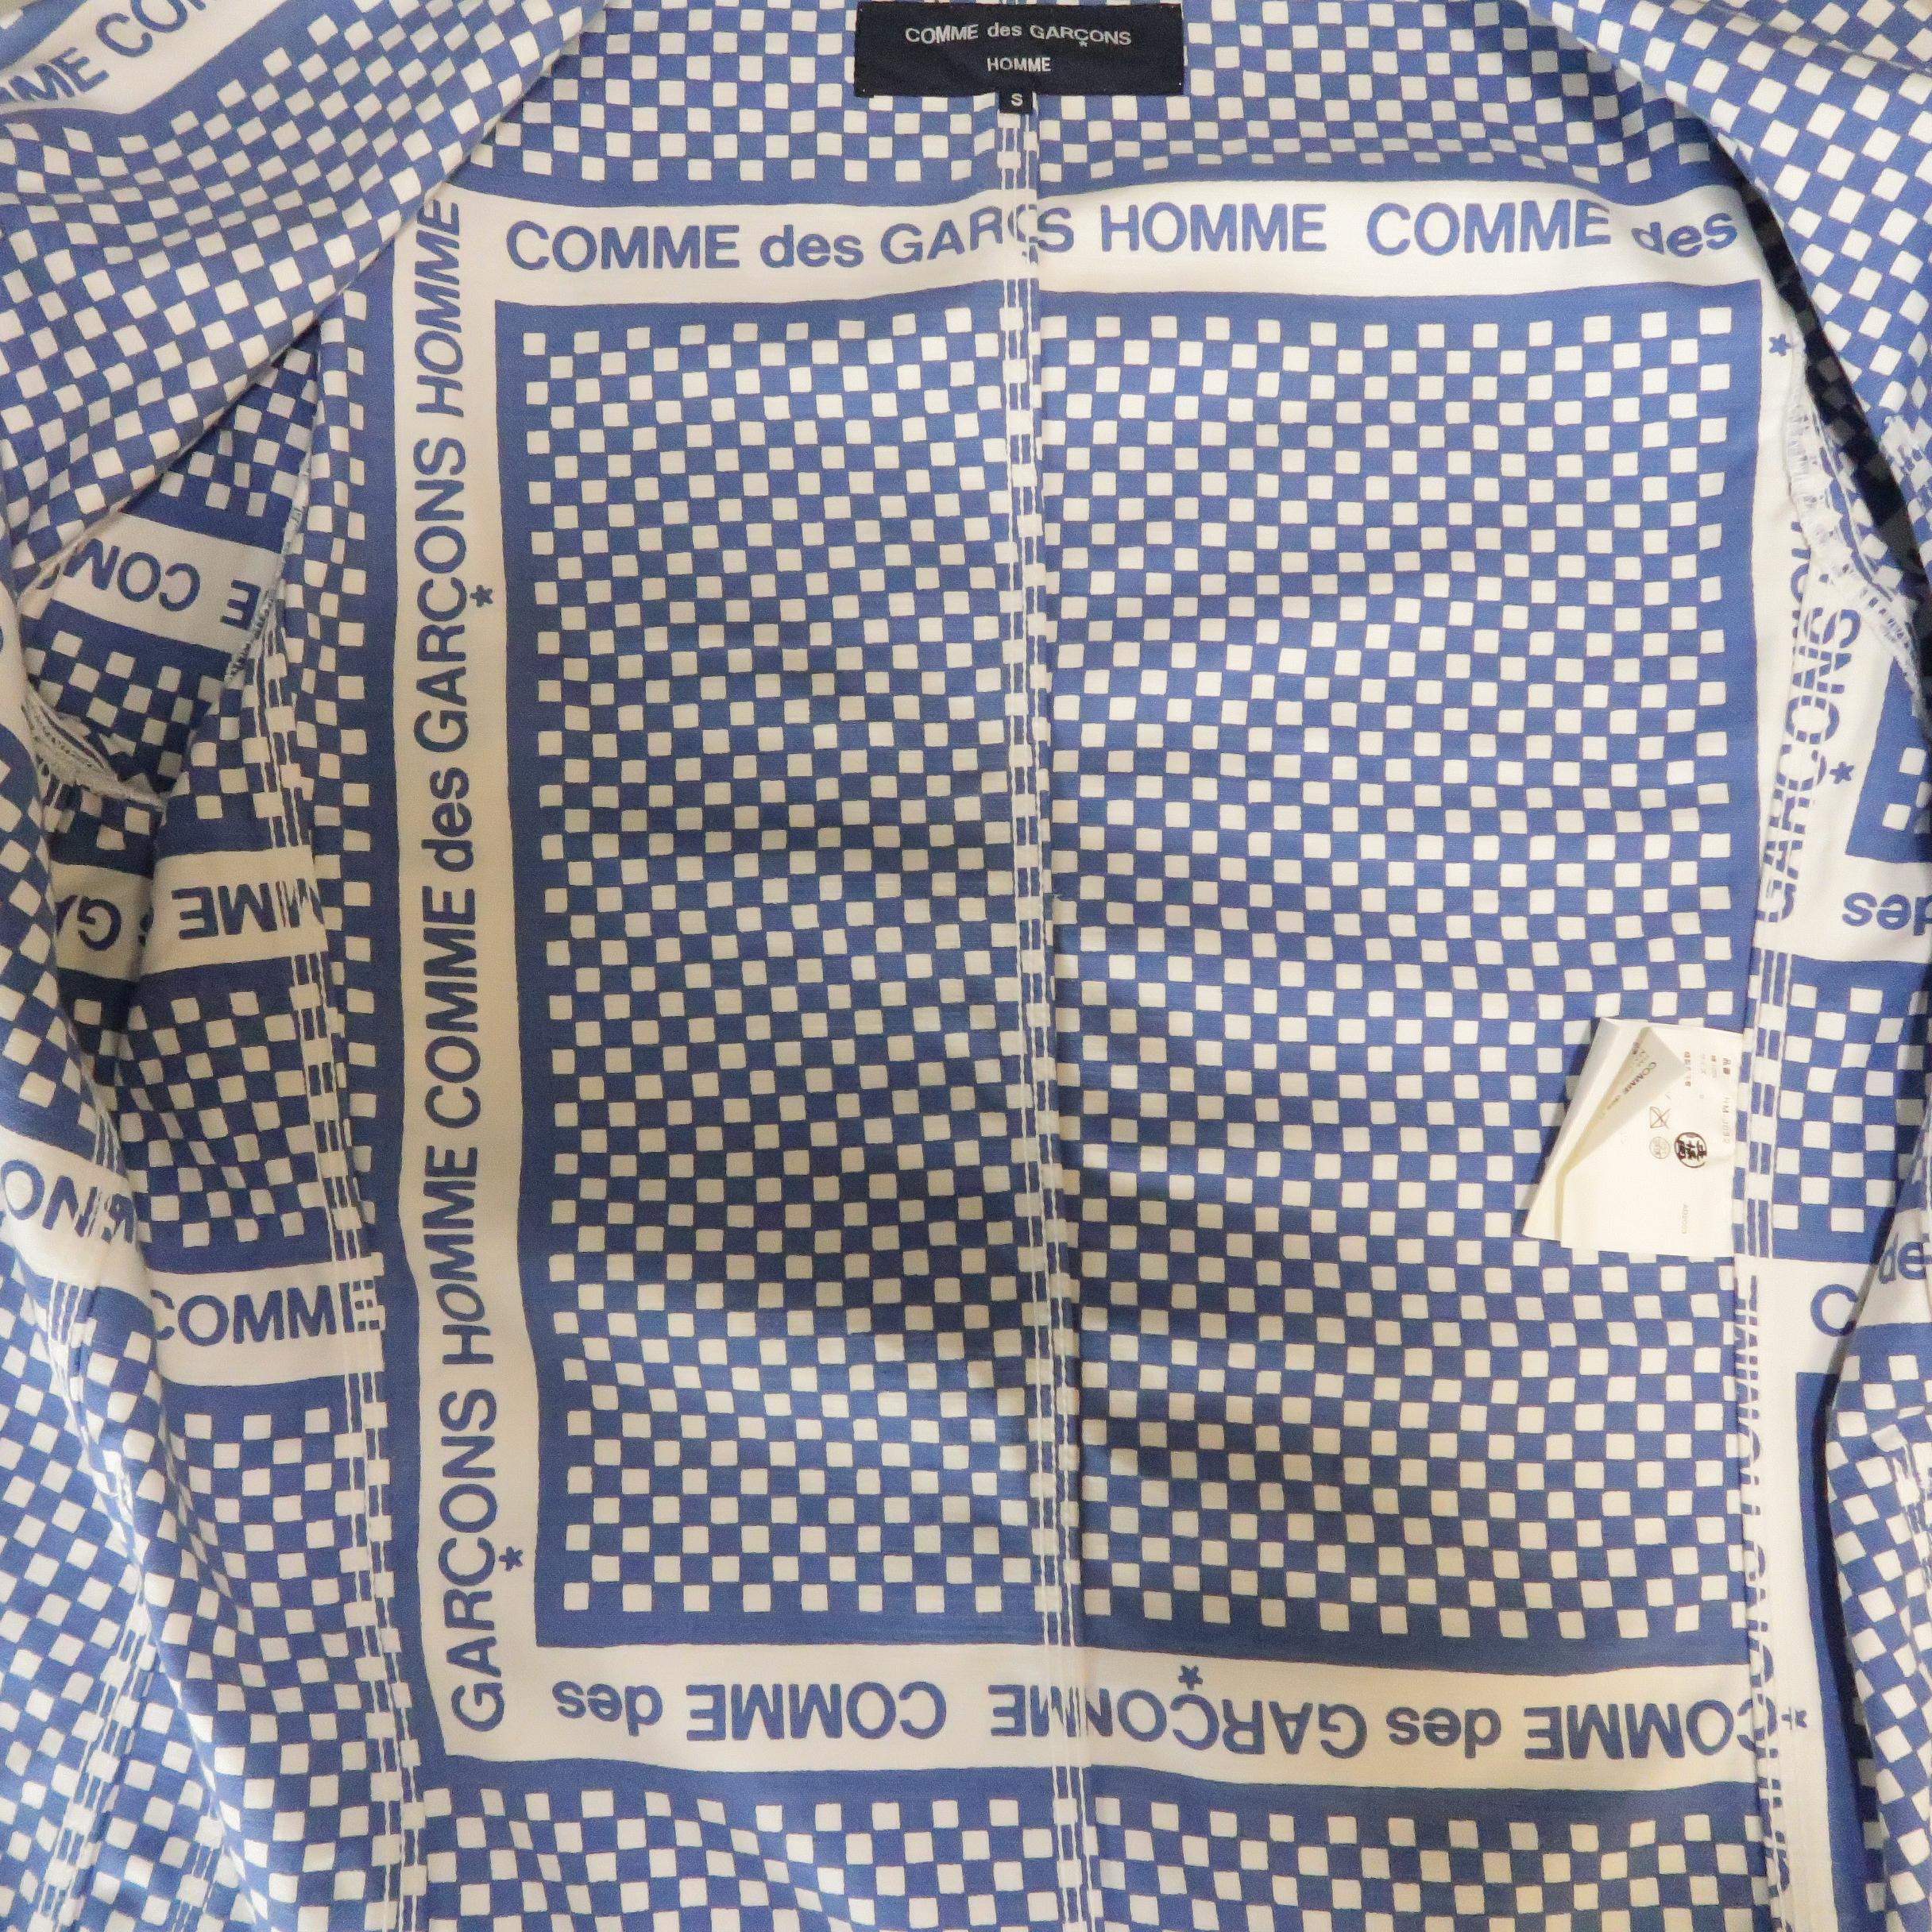 COMME des GARCONS Homme S White & Blue Checkerboard Logo 32 30 Suit AD2003 11